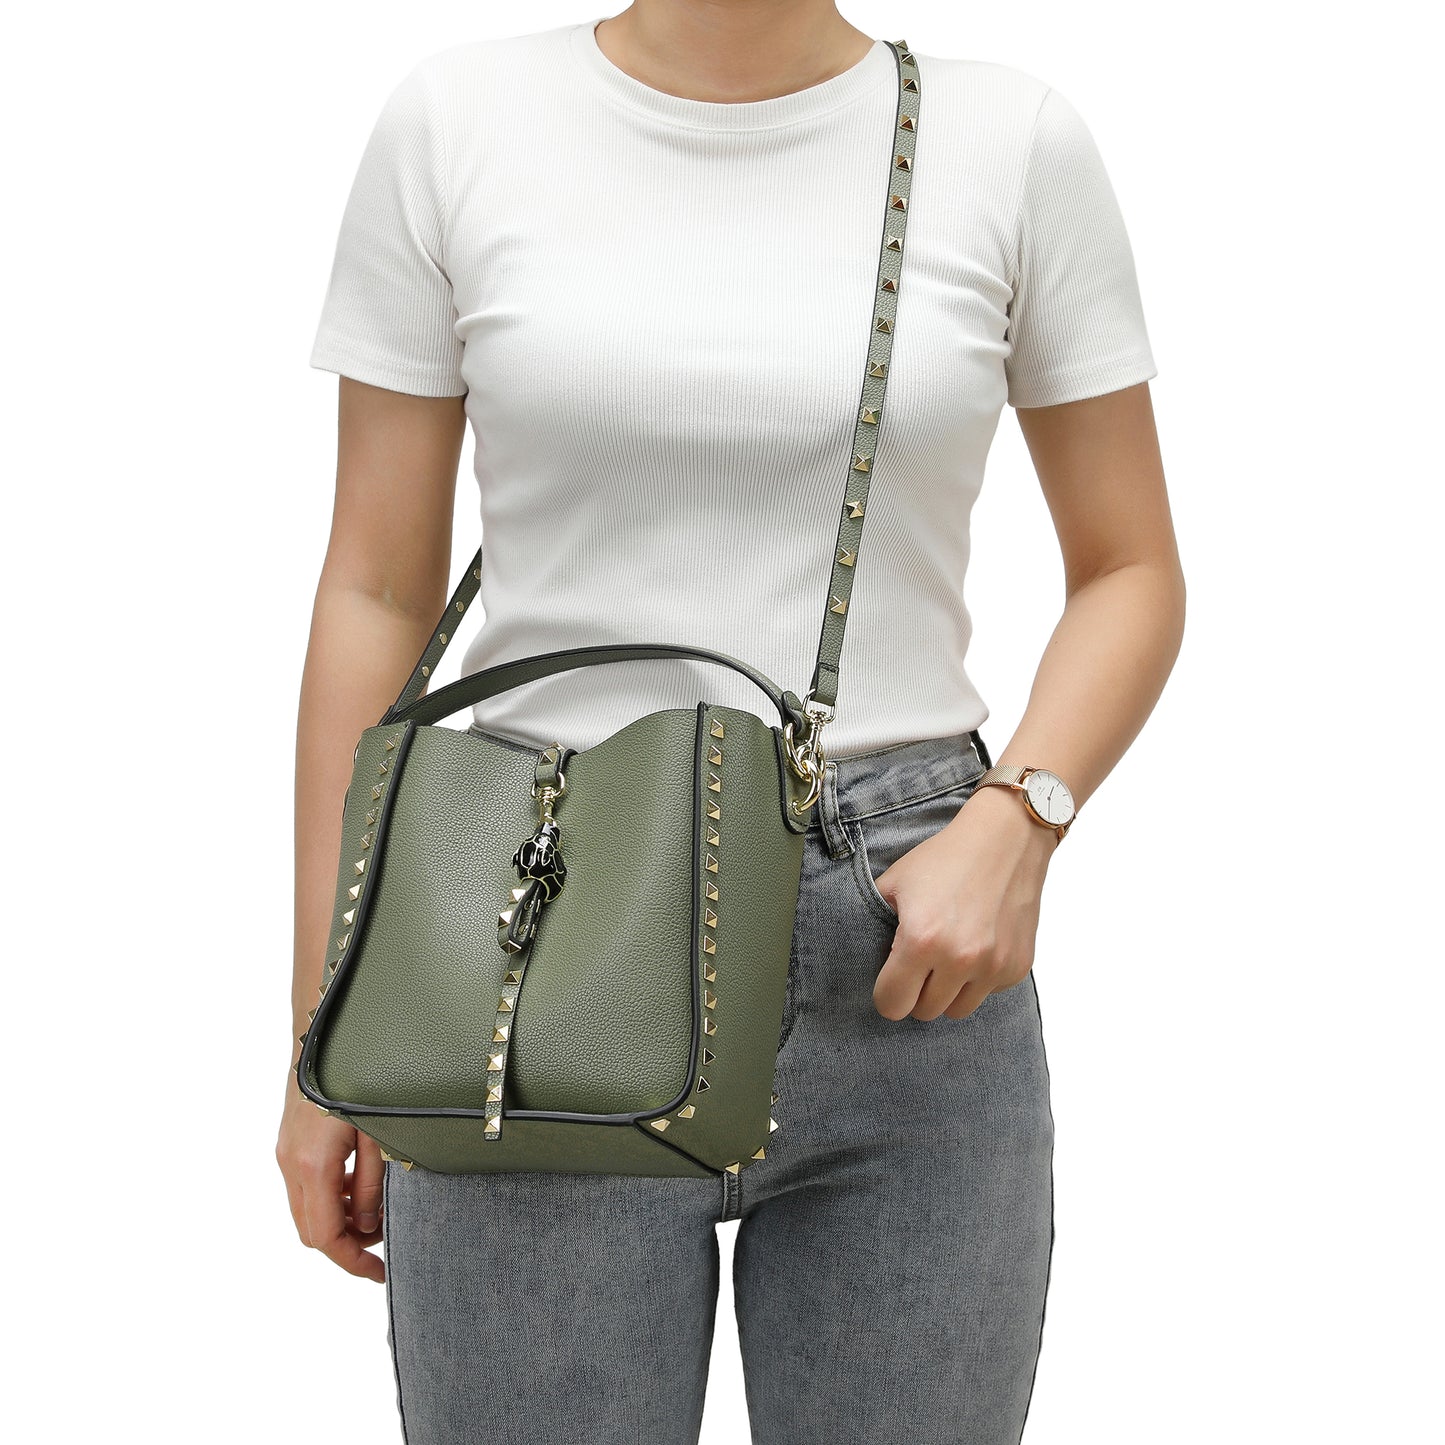 Full-Grain Leather Hobo/ Shoulder Bag